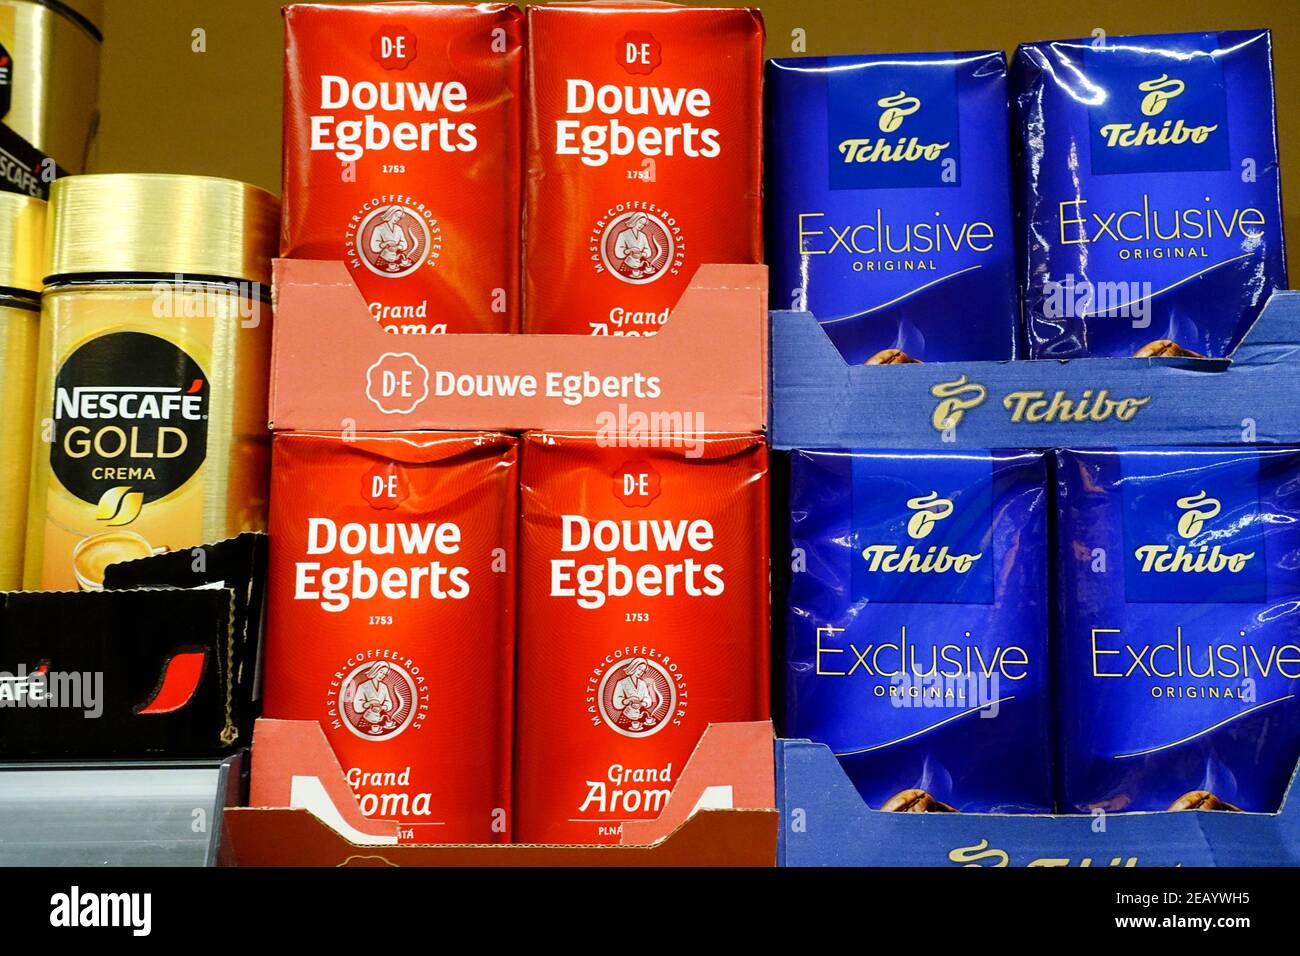 Scaffali caffè supermercato Douwe Egberts Nescafe Tchibo Foto Stock